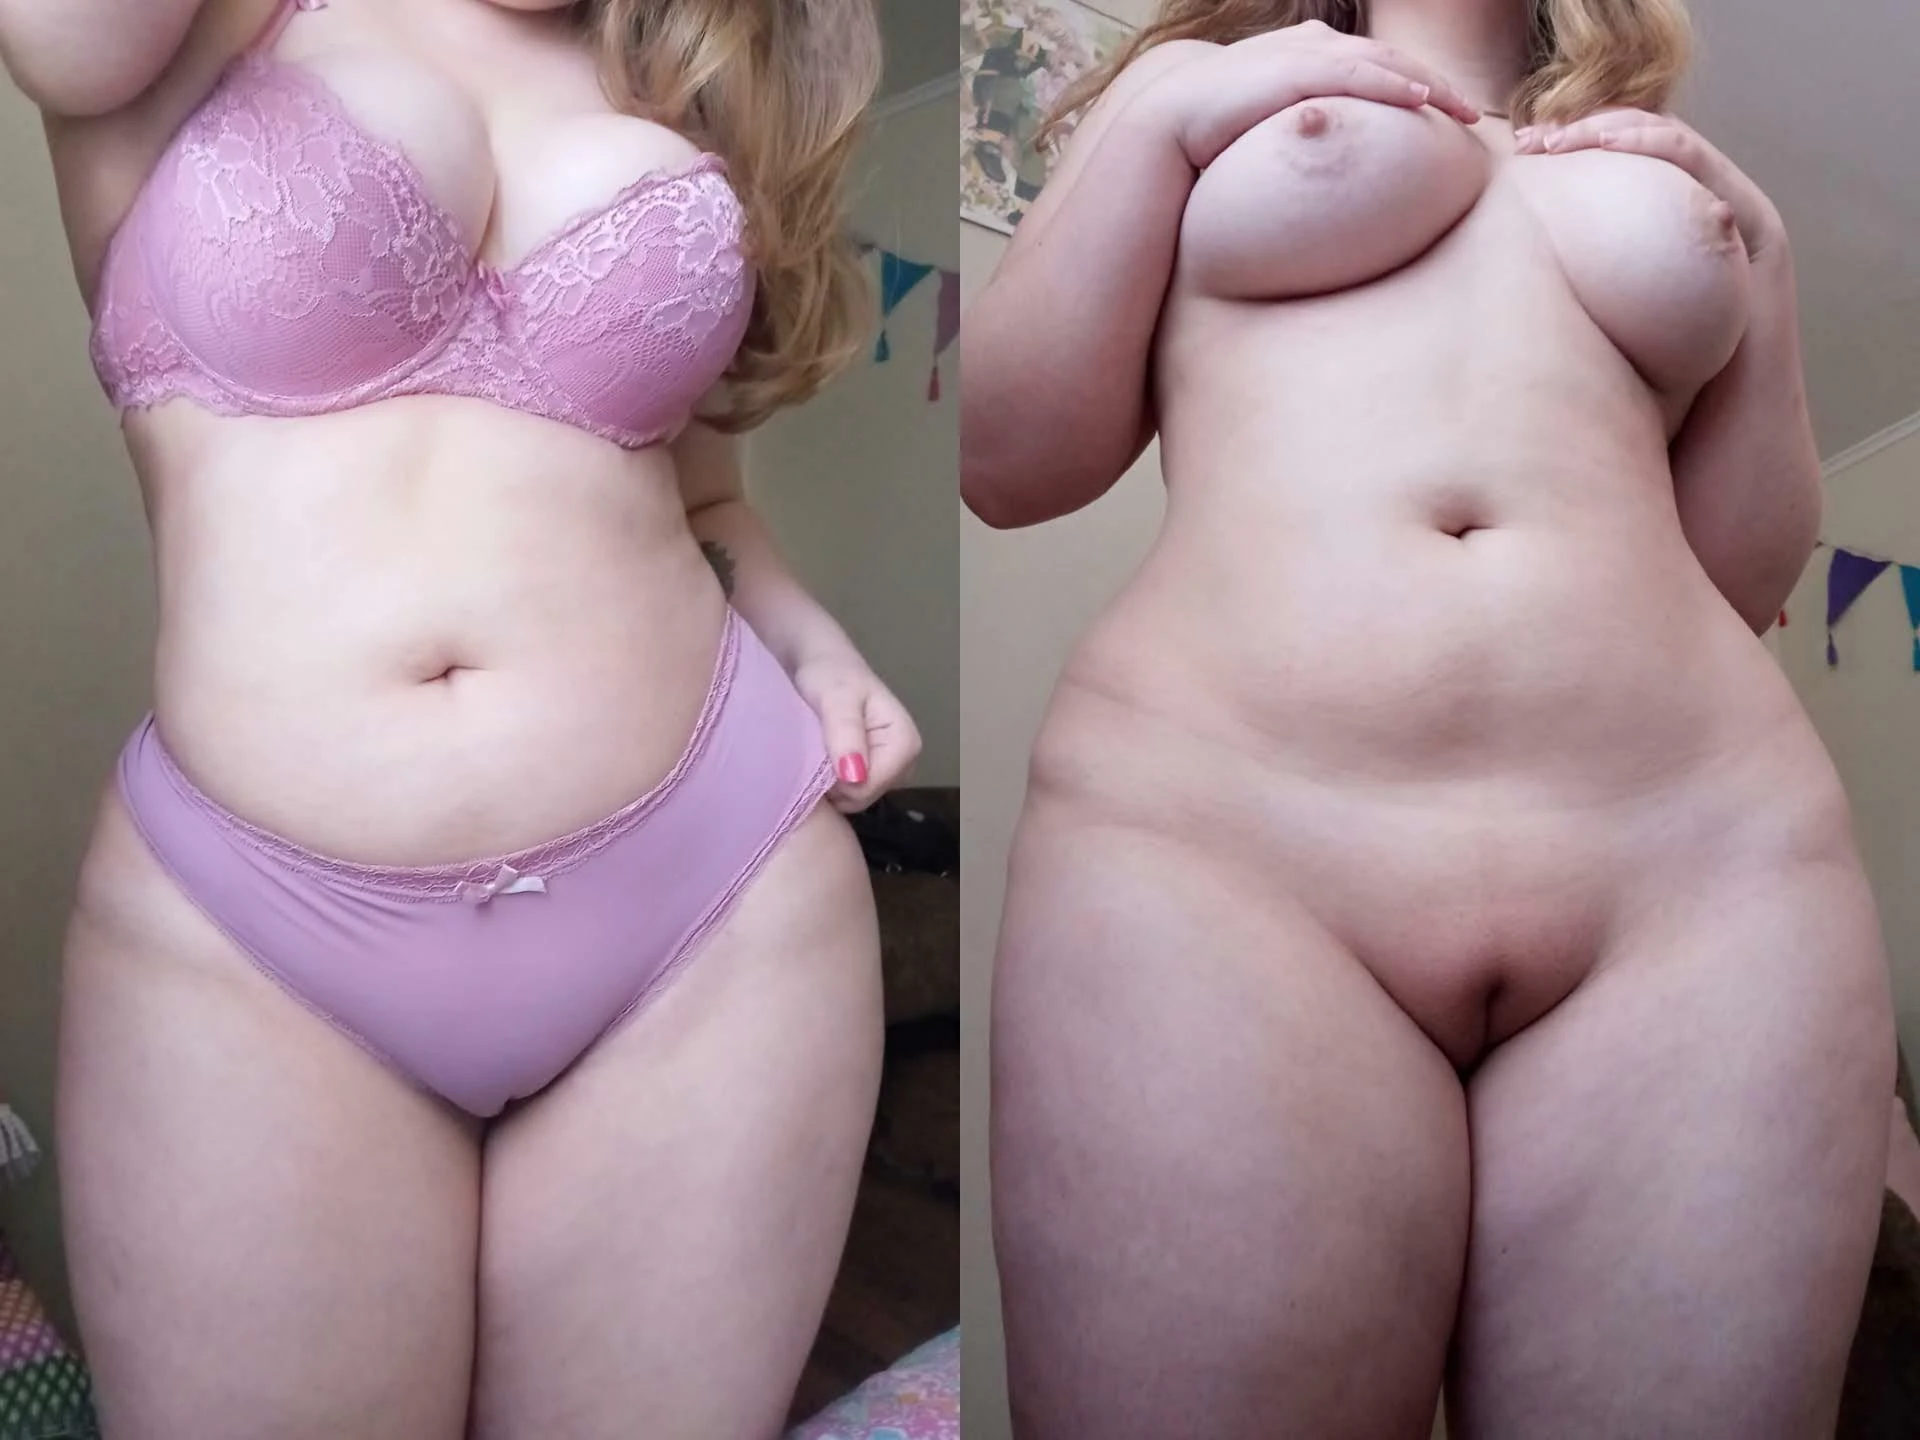 Is my 28 yo chubby body fuckable?